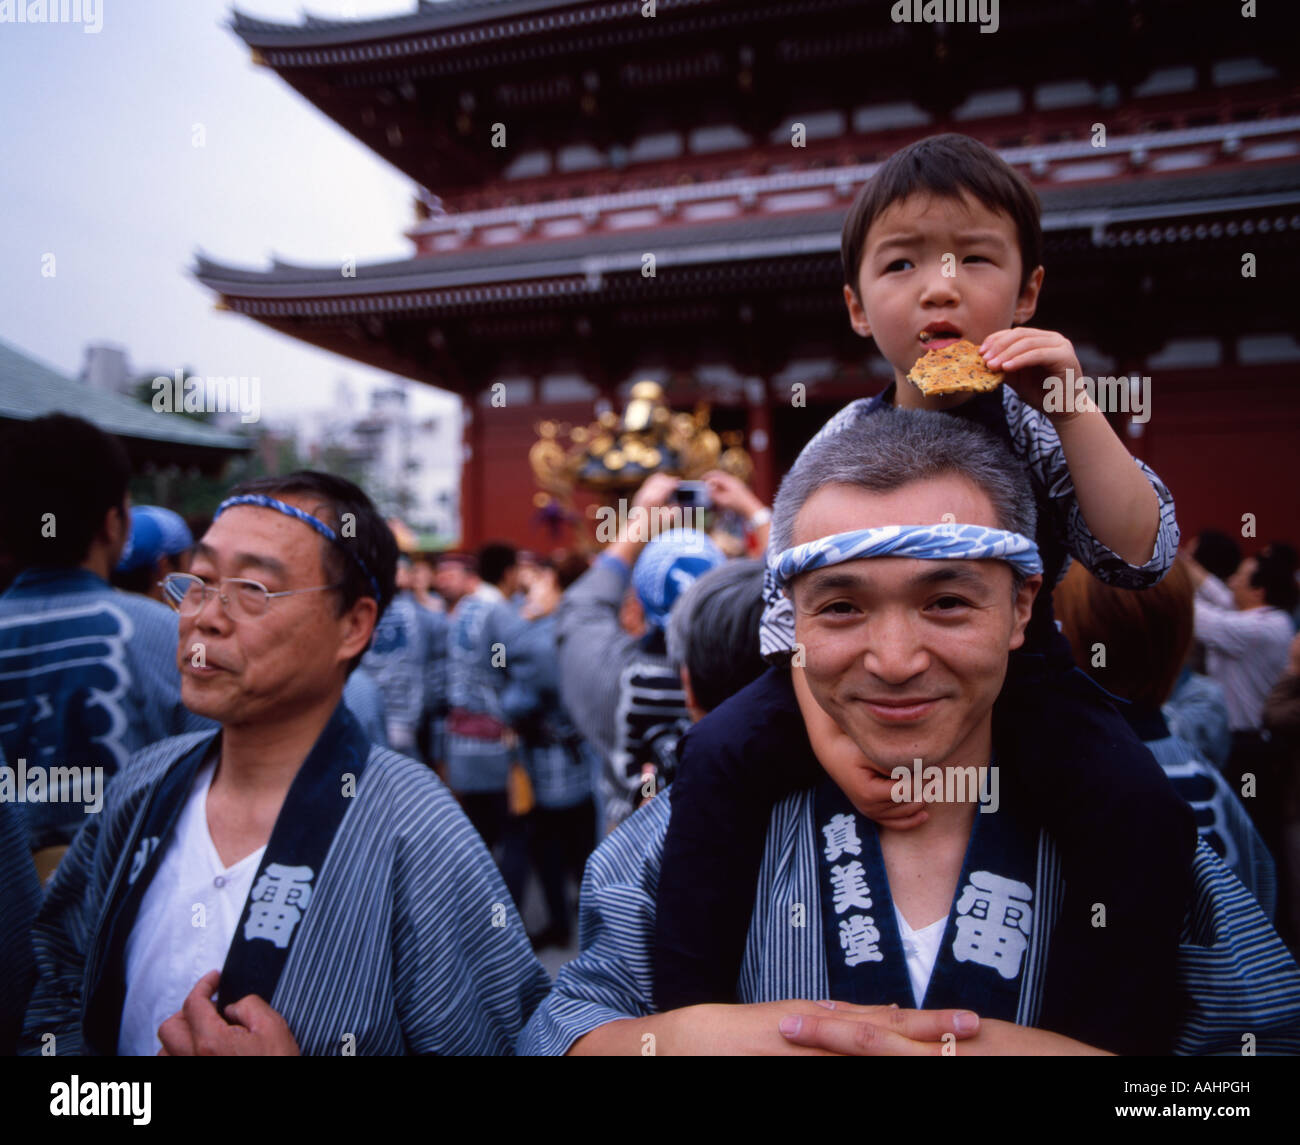 Father and son in yukata costume at Tokyo's Sanja Matsuri held at Senso-ji Temple ( Asakusa Kannon ) Stock Photo